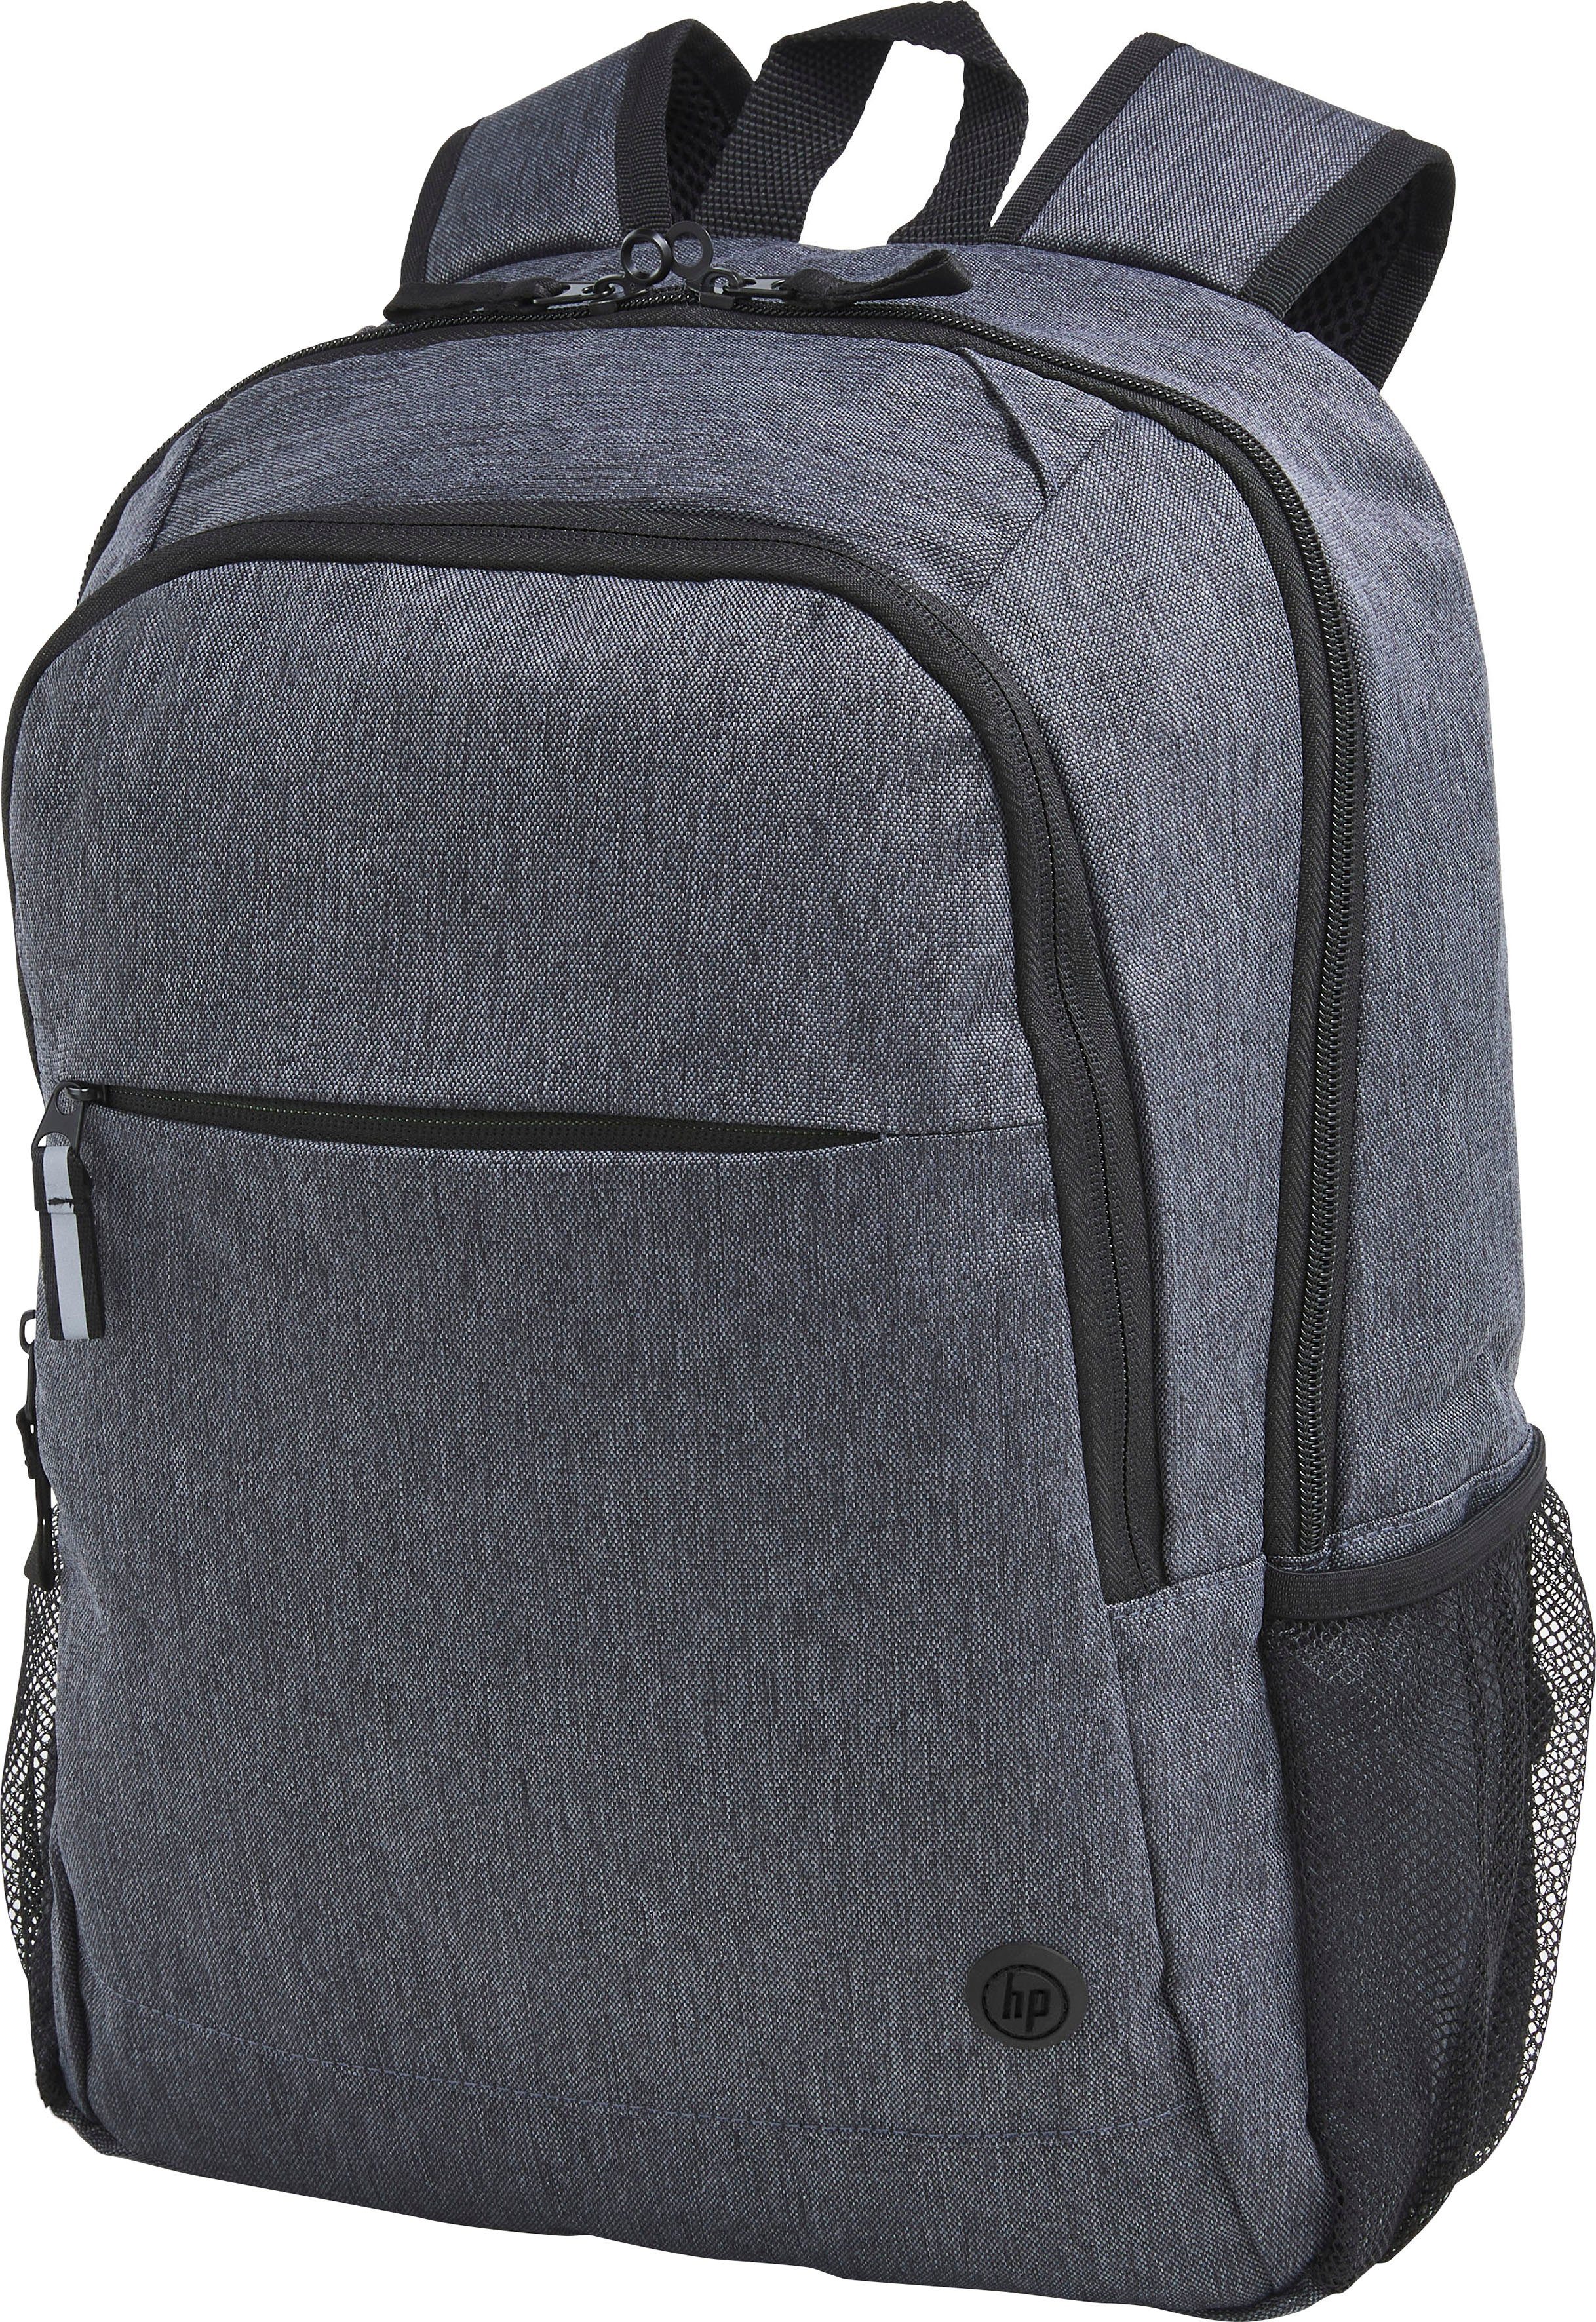 Pro HP 15,6" Prelude Backpack Notebookrucksack